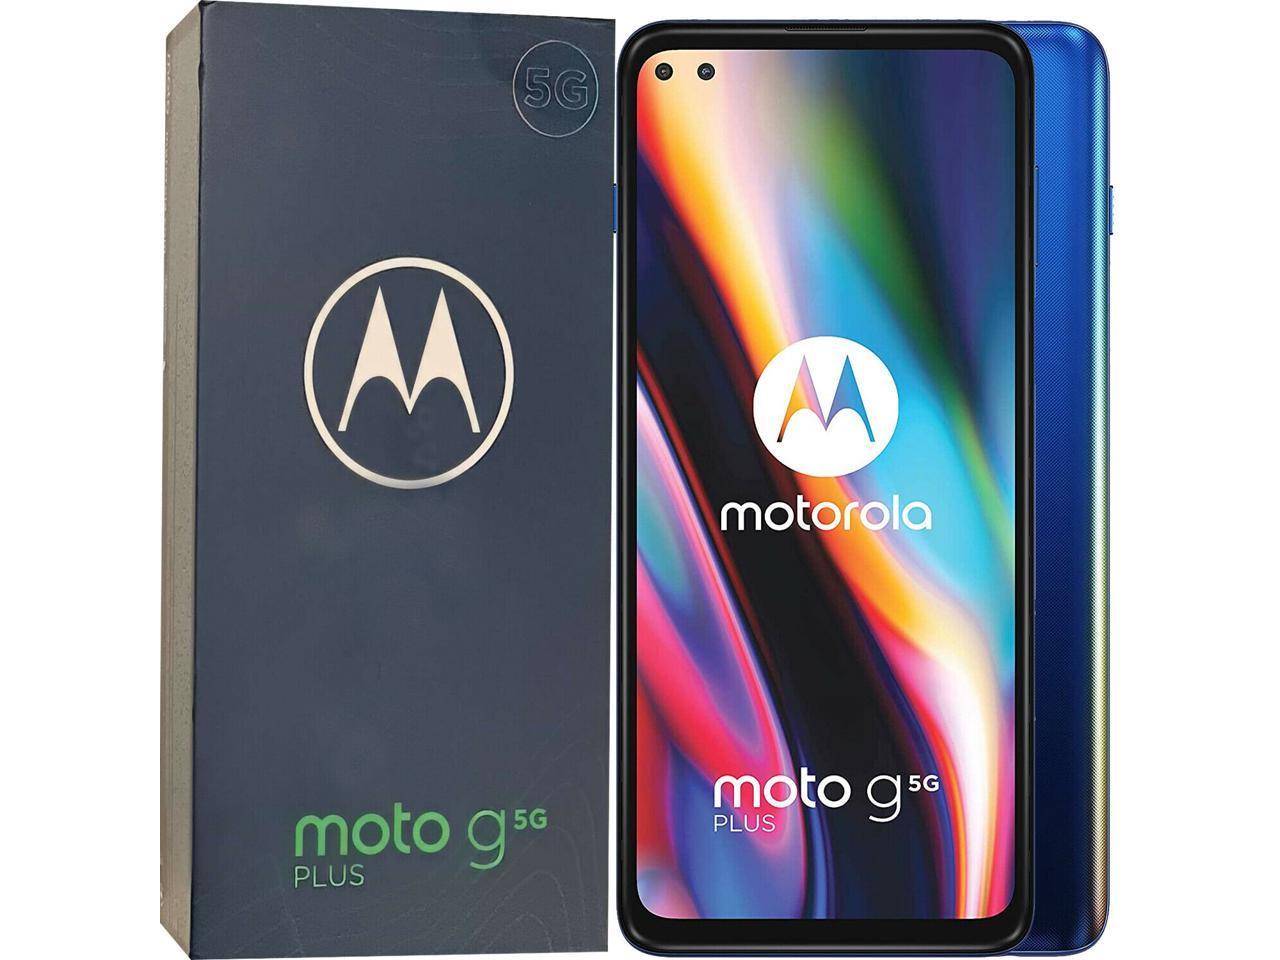 Motorola Moto G 5G Plus Dual-SIM 128GB ROM + RAM (GSM Only CDMA) Factory Unlocked Android Smartphone (Mystic Lilac) - International Version - Newegg.com